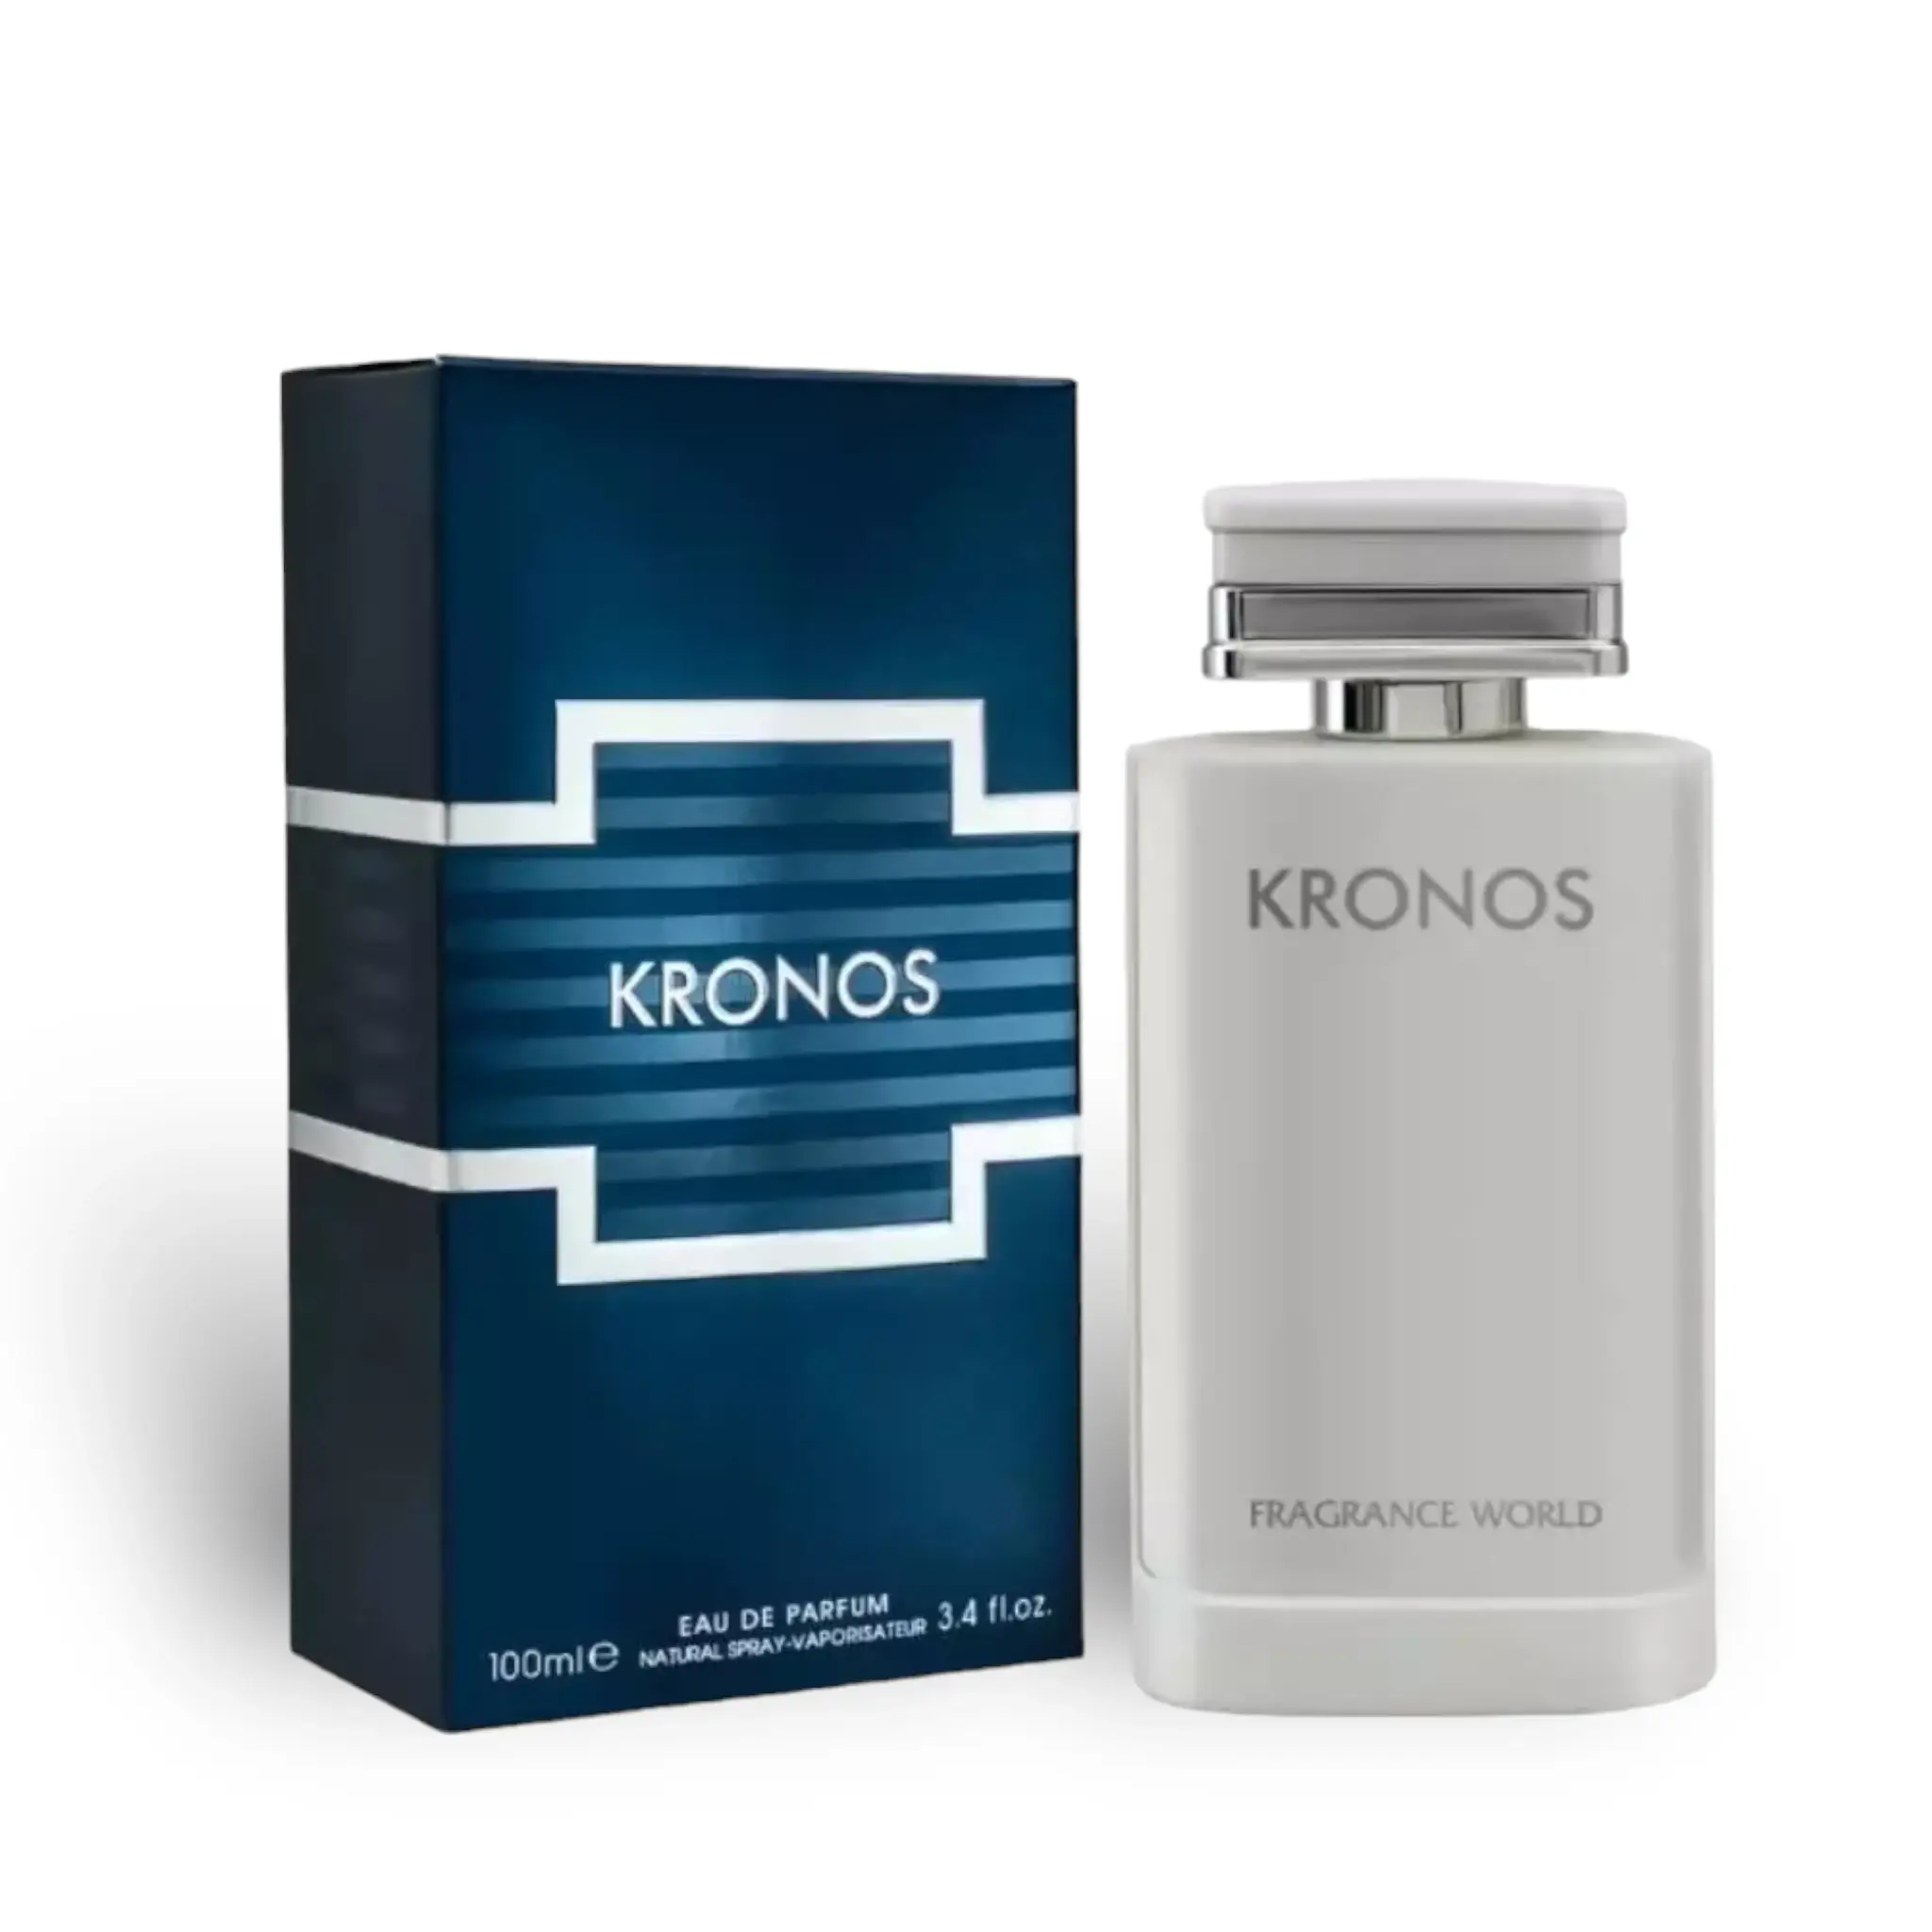 Kronos Perfume Eau De Parfum 100Ml By Fragrance World